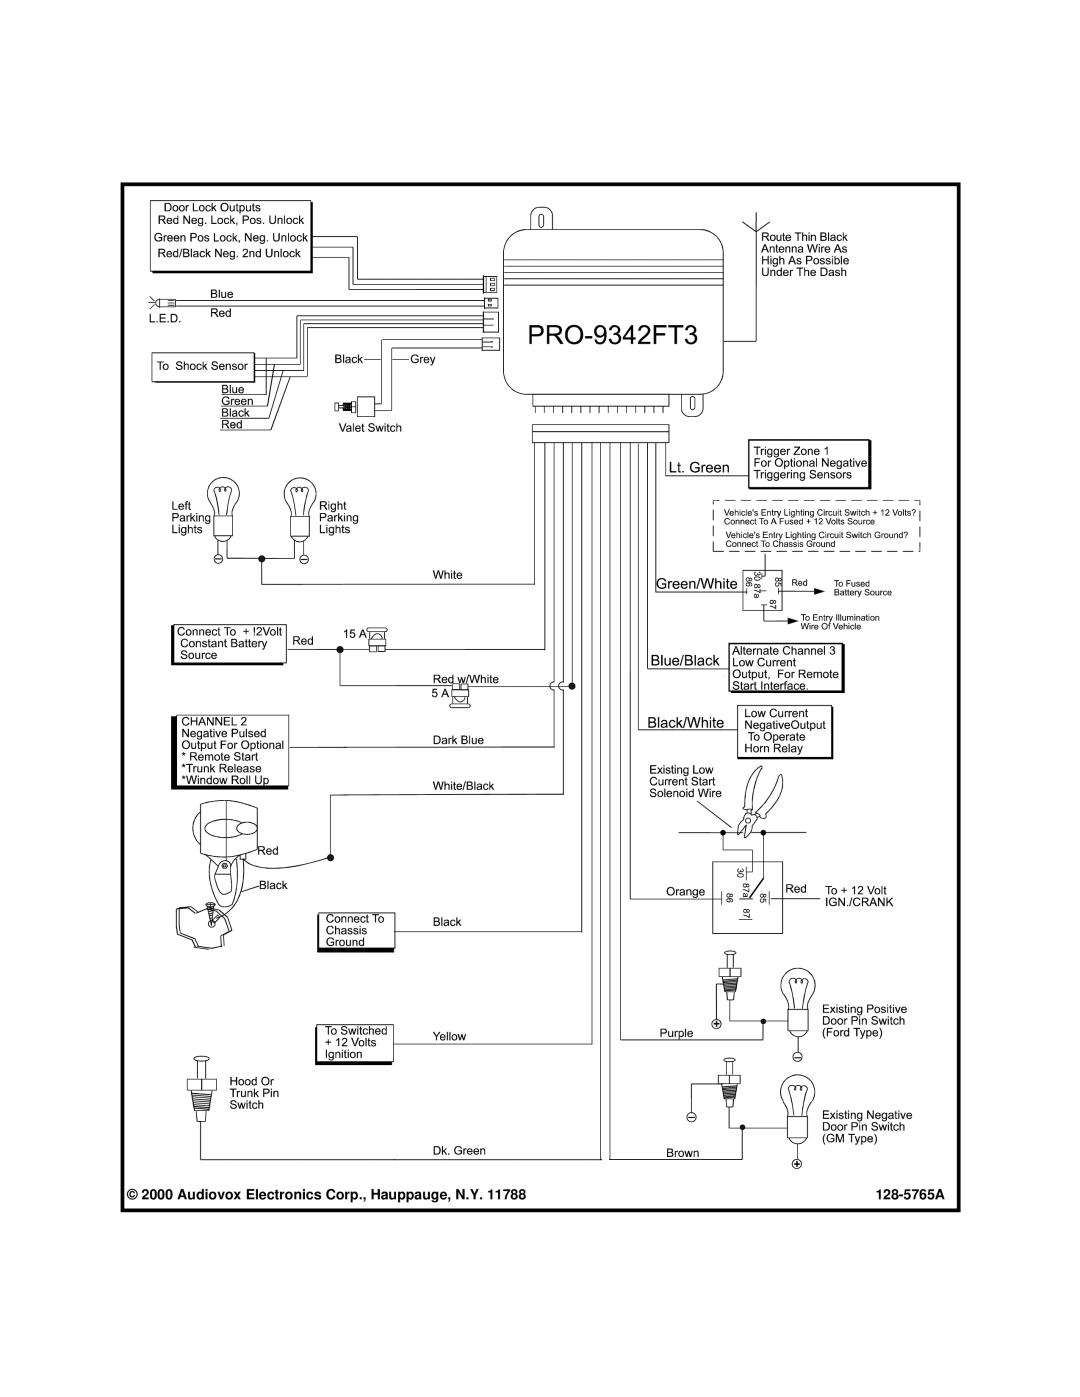 Audiovox PRO-9342FT3 installation manual Audiovox Electronics Corp., Hauppauge, N.Y 